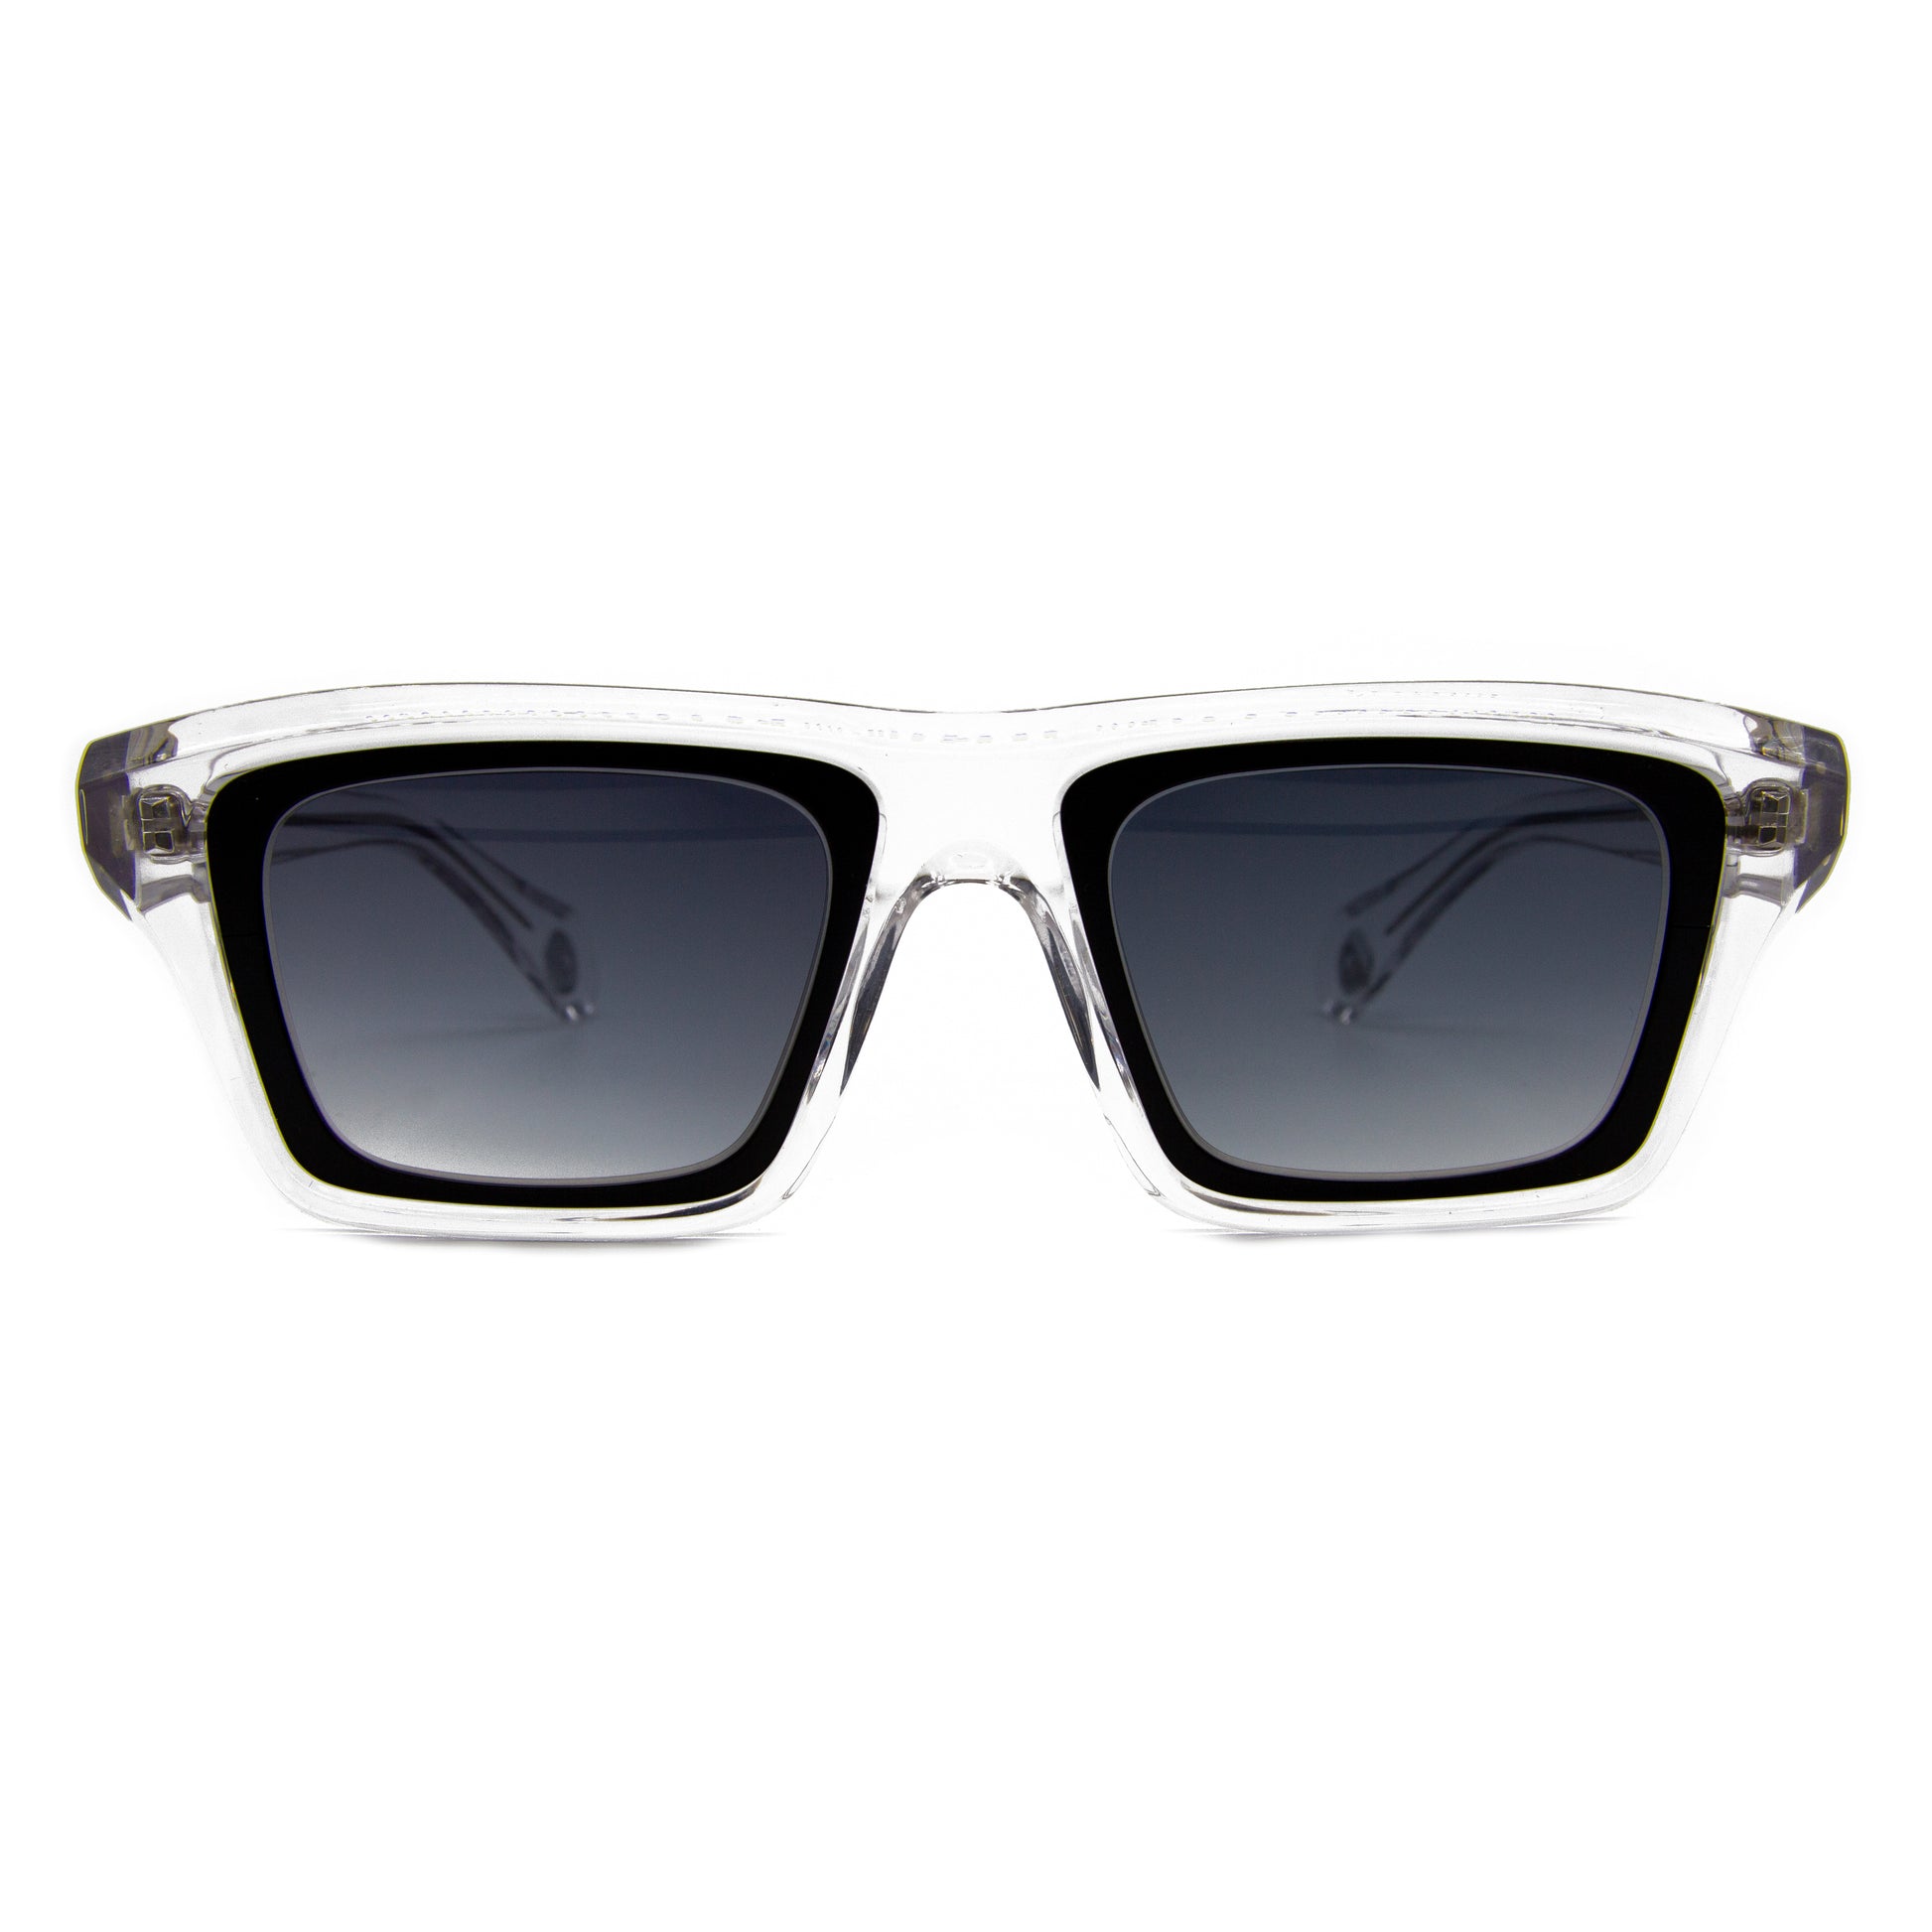 Theo - Eyewear - Mille+93 - 2 - Sunglasses